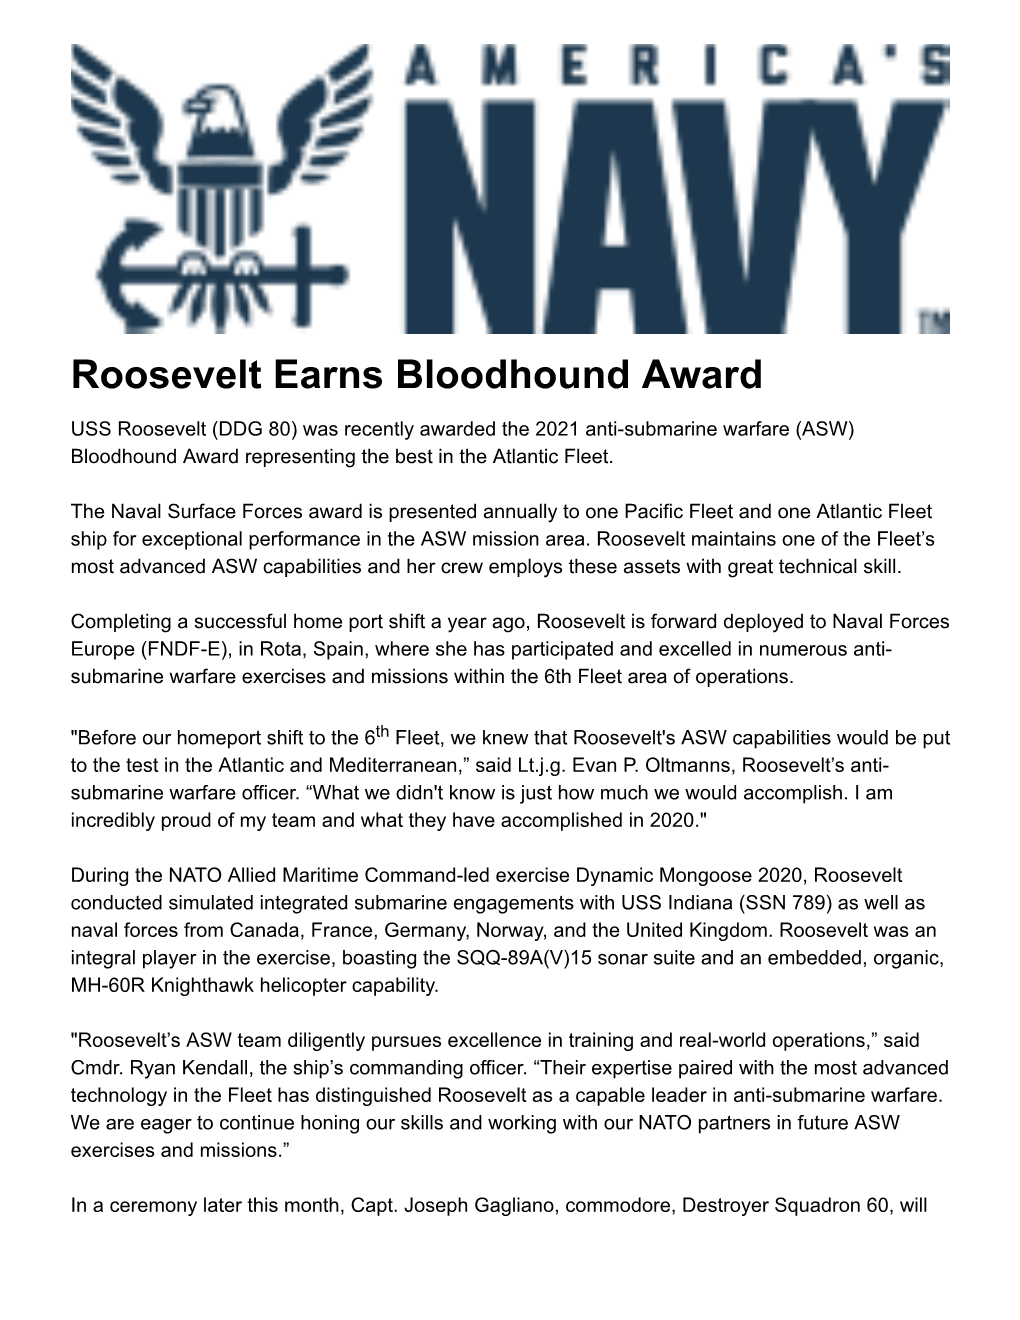 Roosevelt Earns Bloodhound Award